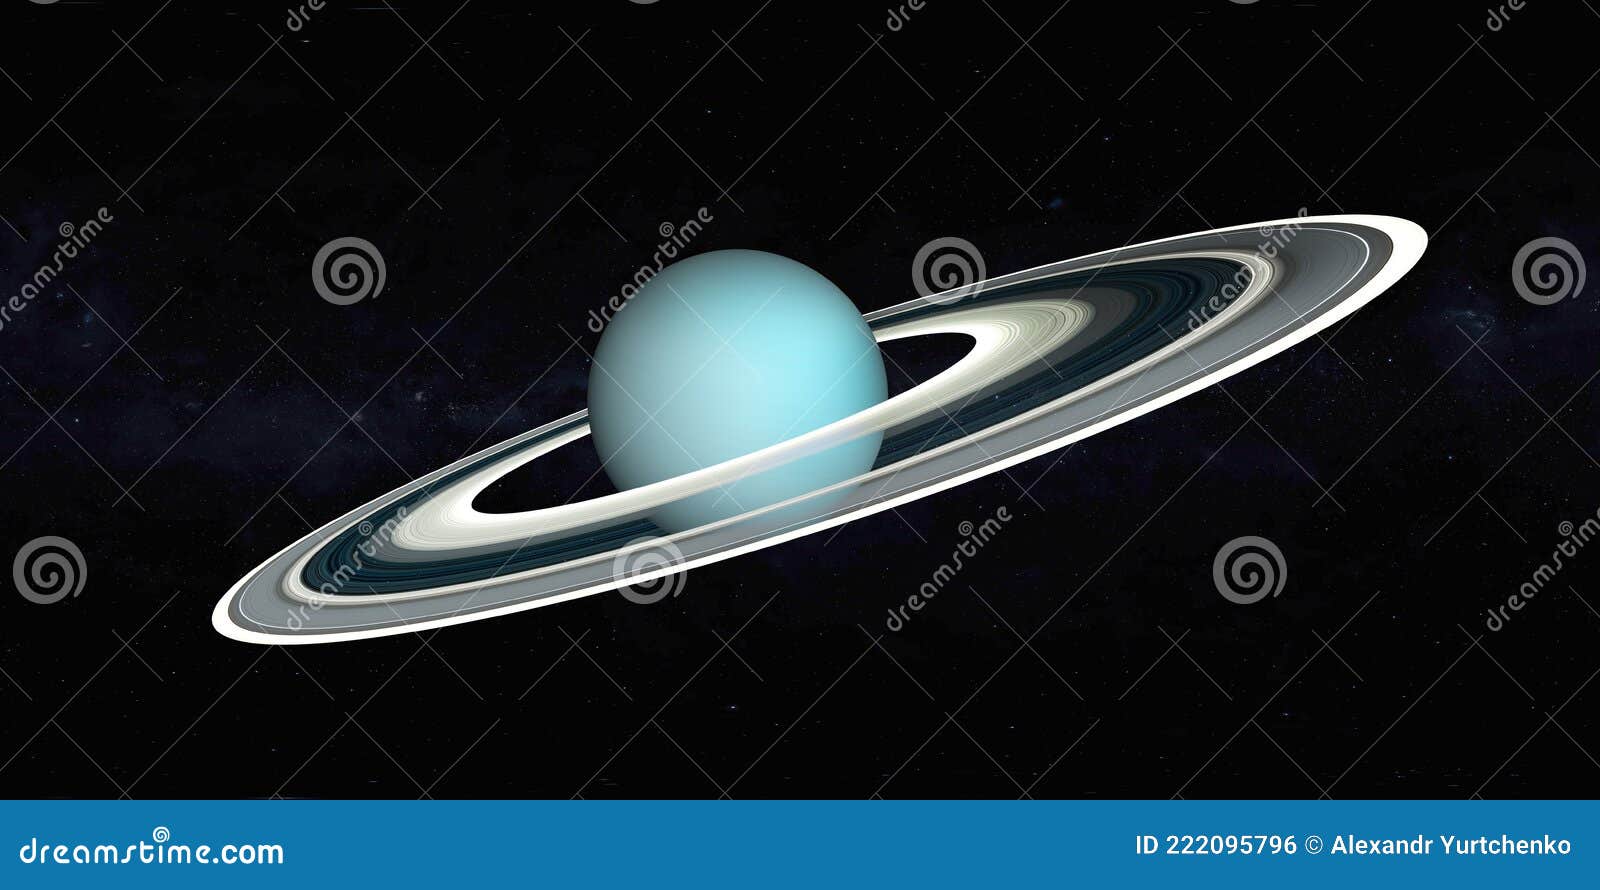 James Webb Space Telescope captures stunning new image of Uranus | Tech  News | Metro News